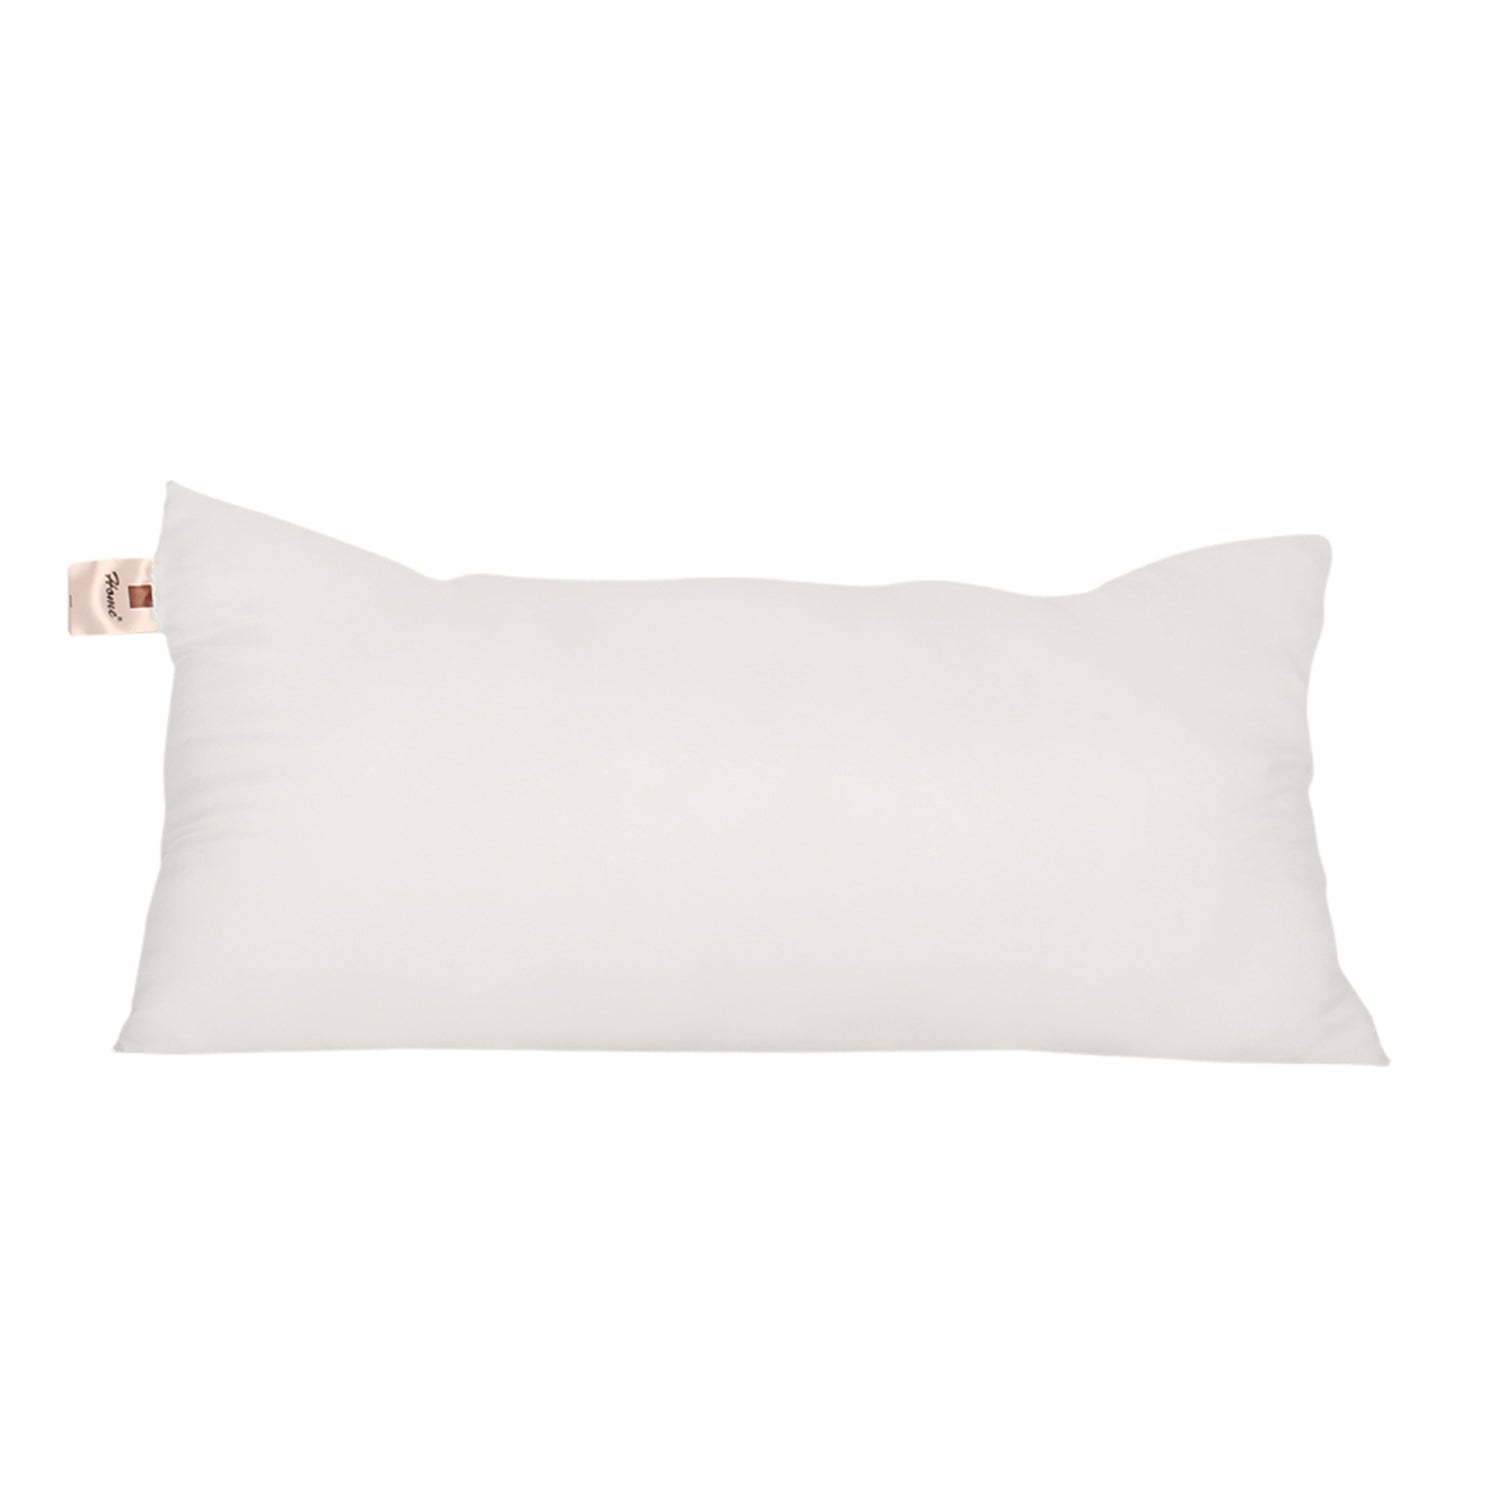 Micro Fiber Cushion Insert Extra Soft, White | 12x24 Inch